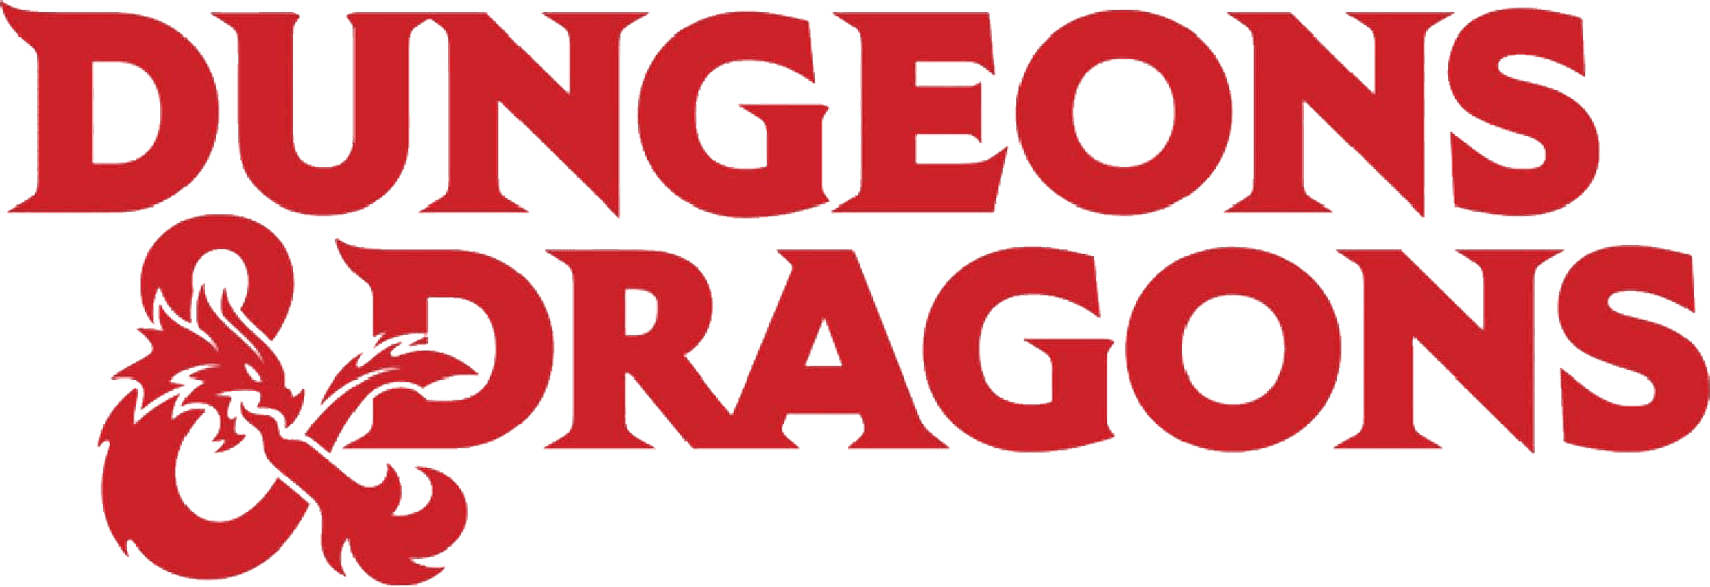 Dungeons & Dragons - Basement Games Dubbo